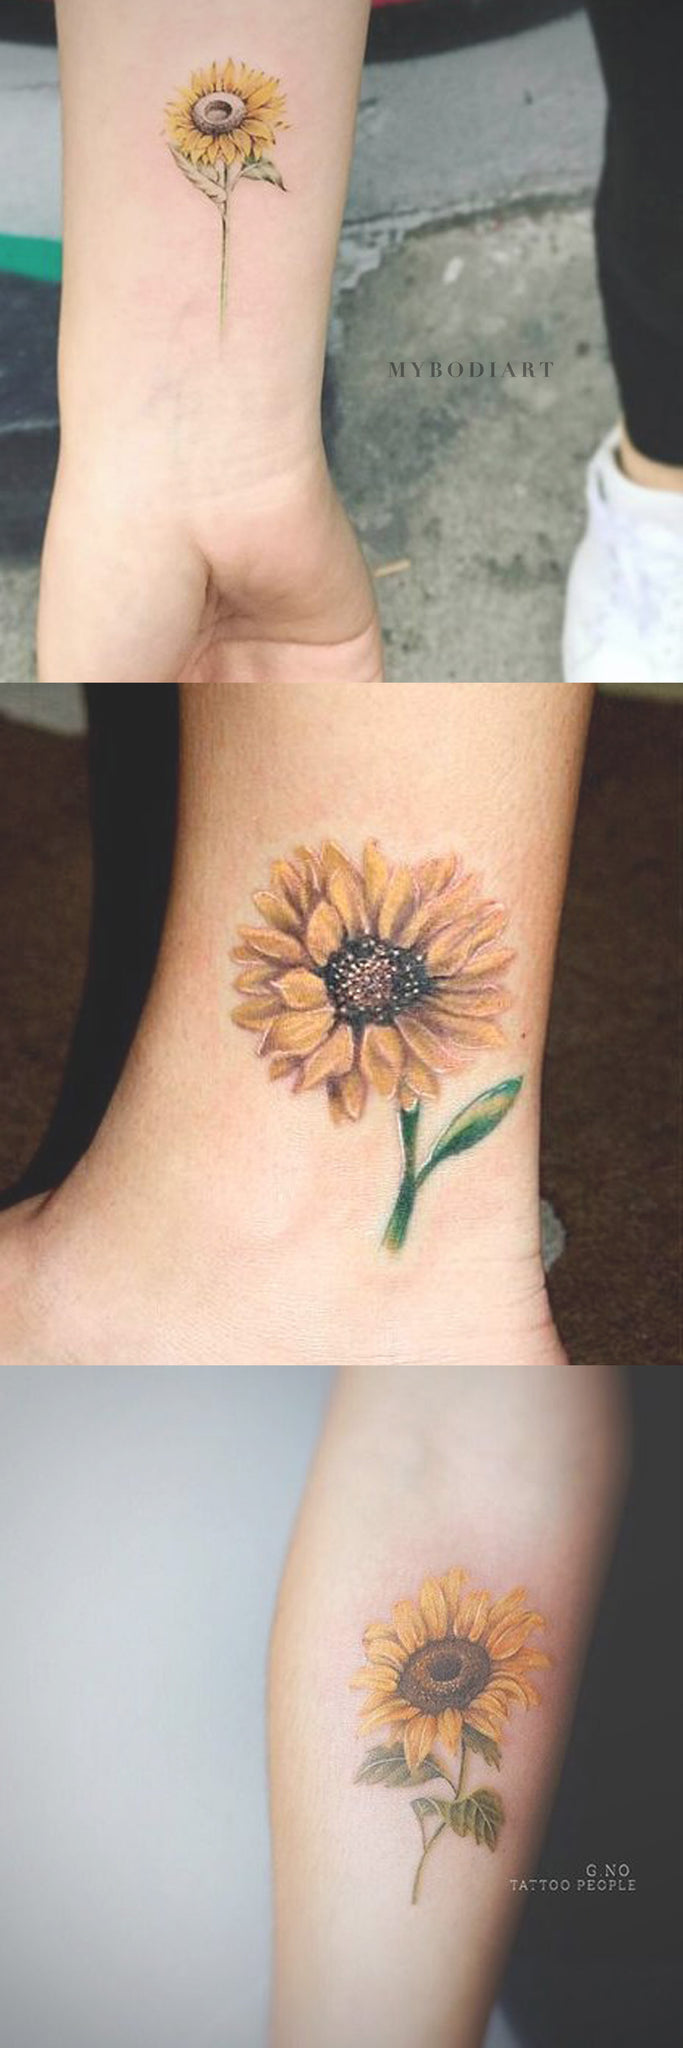 Cute Realistic Watercolor Sunflower Tattoo Ideas for Women Floral Flower Forearm Wrist Ankle Tattoos -  ideas lindas del tatuaje del girasol para las mujeres - www.MyBodiArt.com 